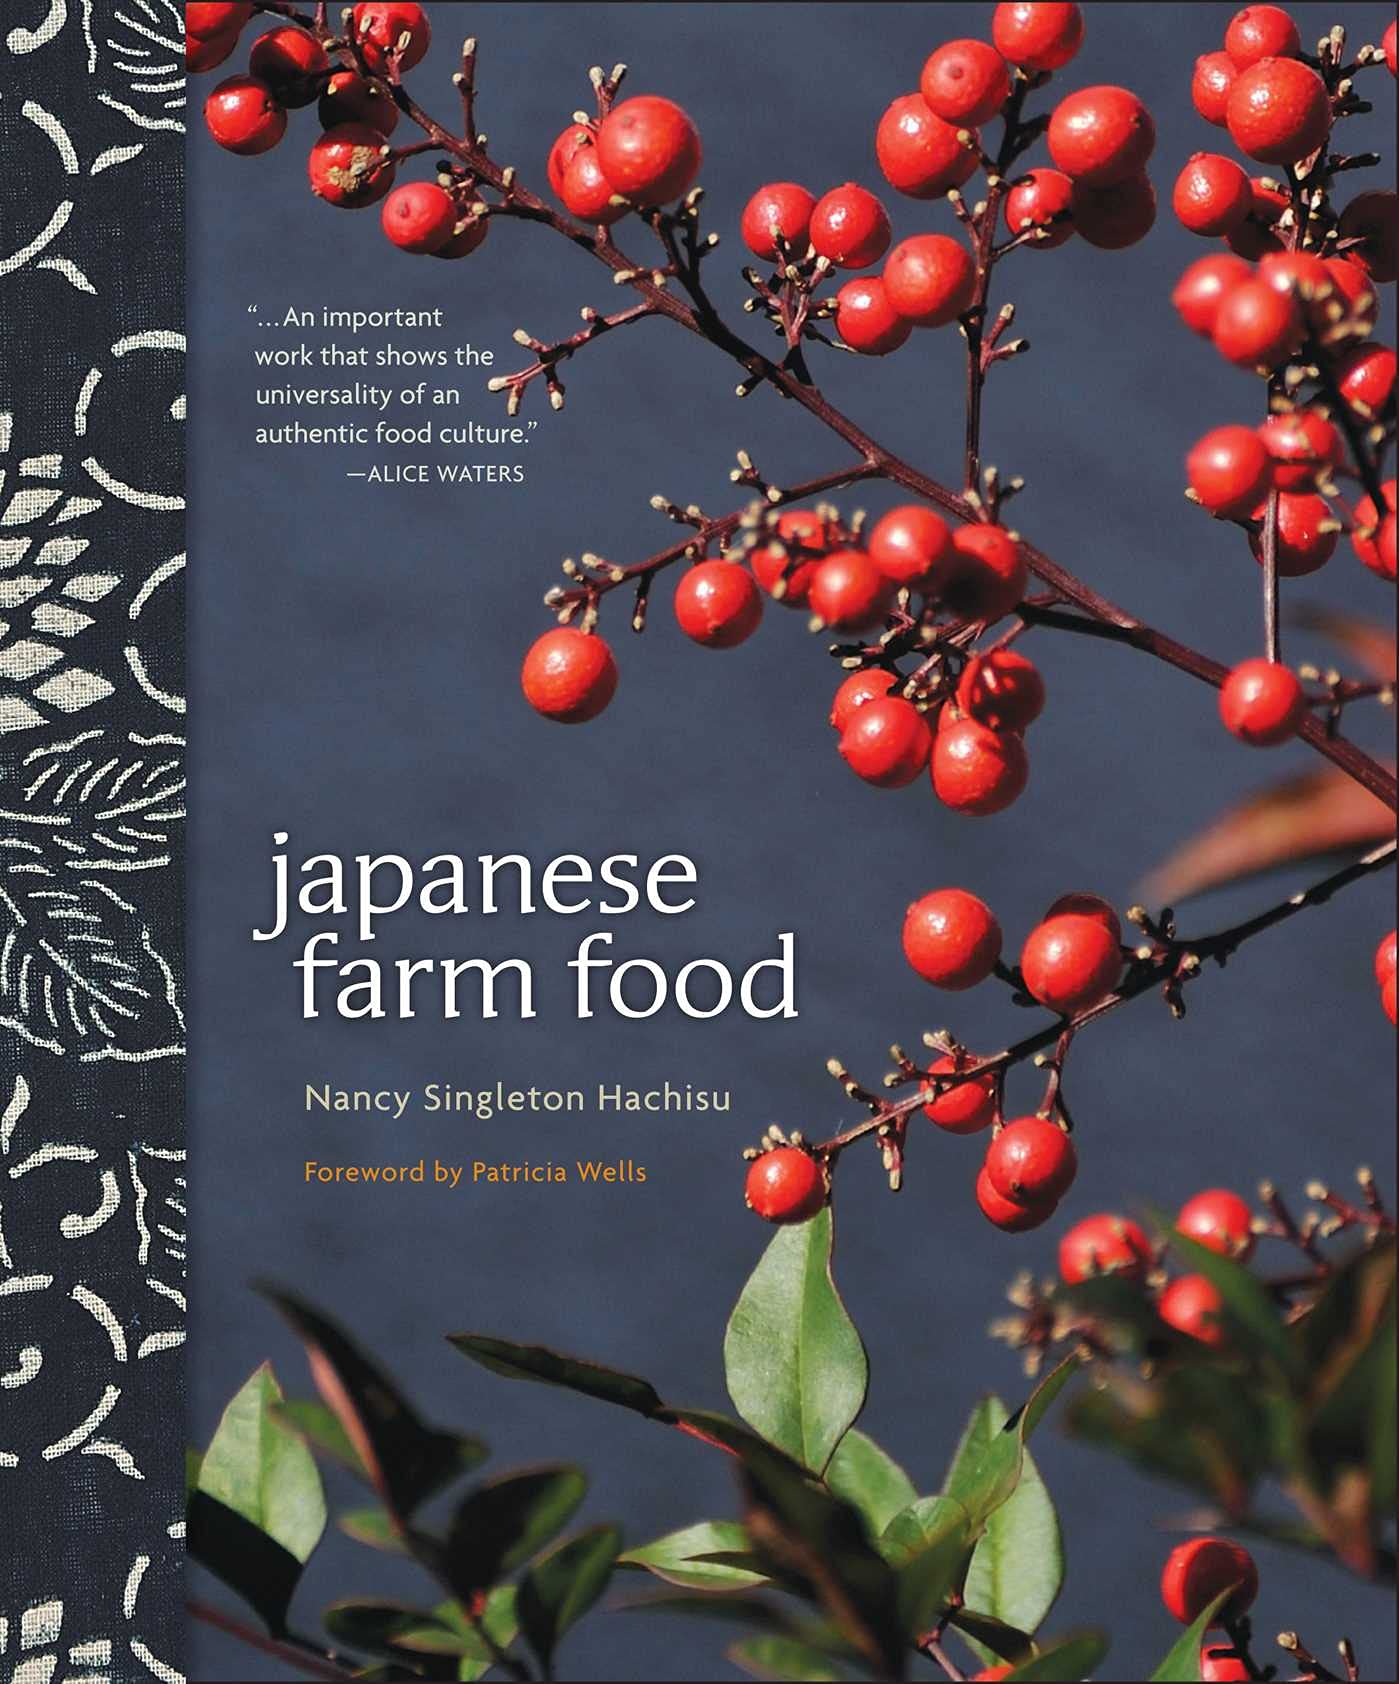 Japanese Farm Food, Paperback Edition (Nancy Singleton Hachisu)